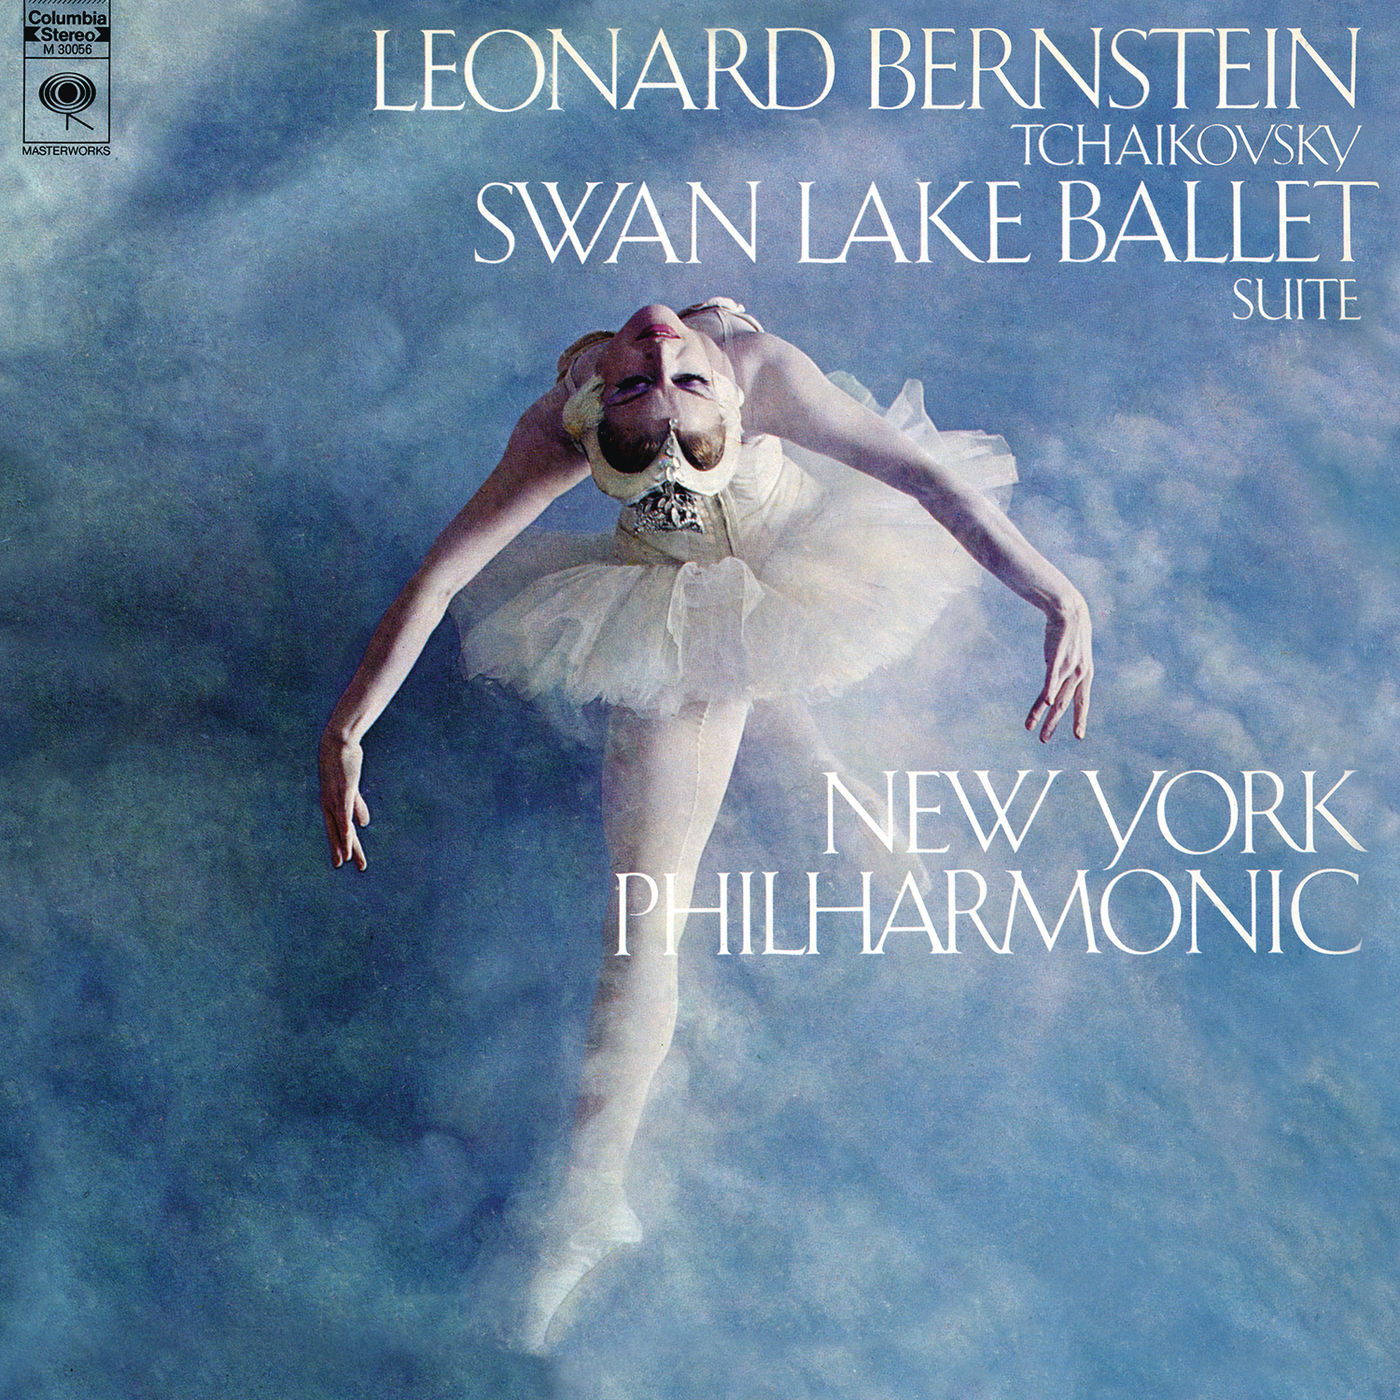 Leonard Bernstein – Tchaikovsky- Piano Concerto No. 1 in B-Flat Minor, Op. 23